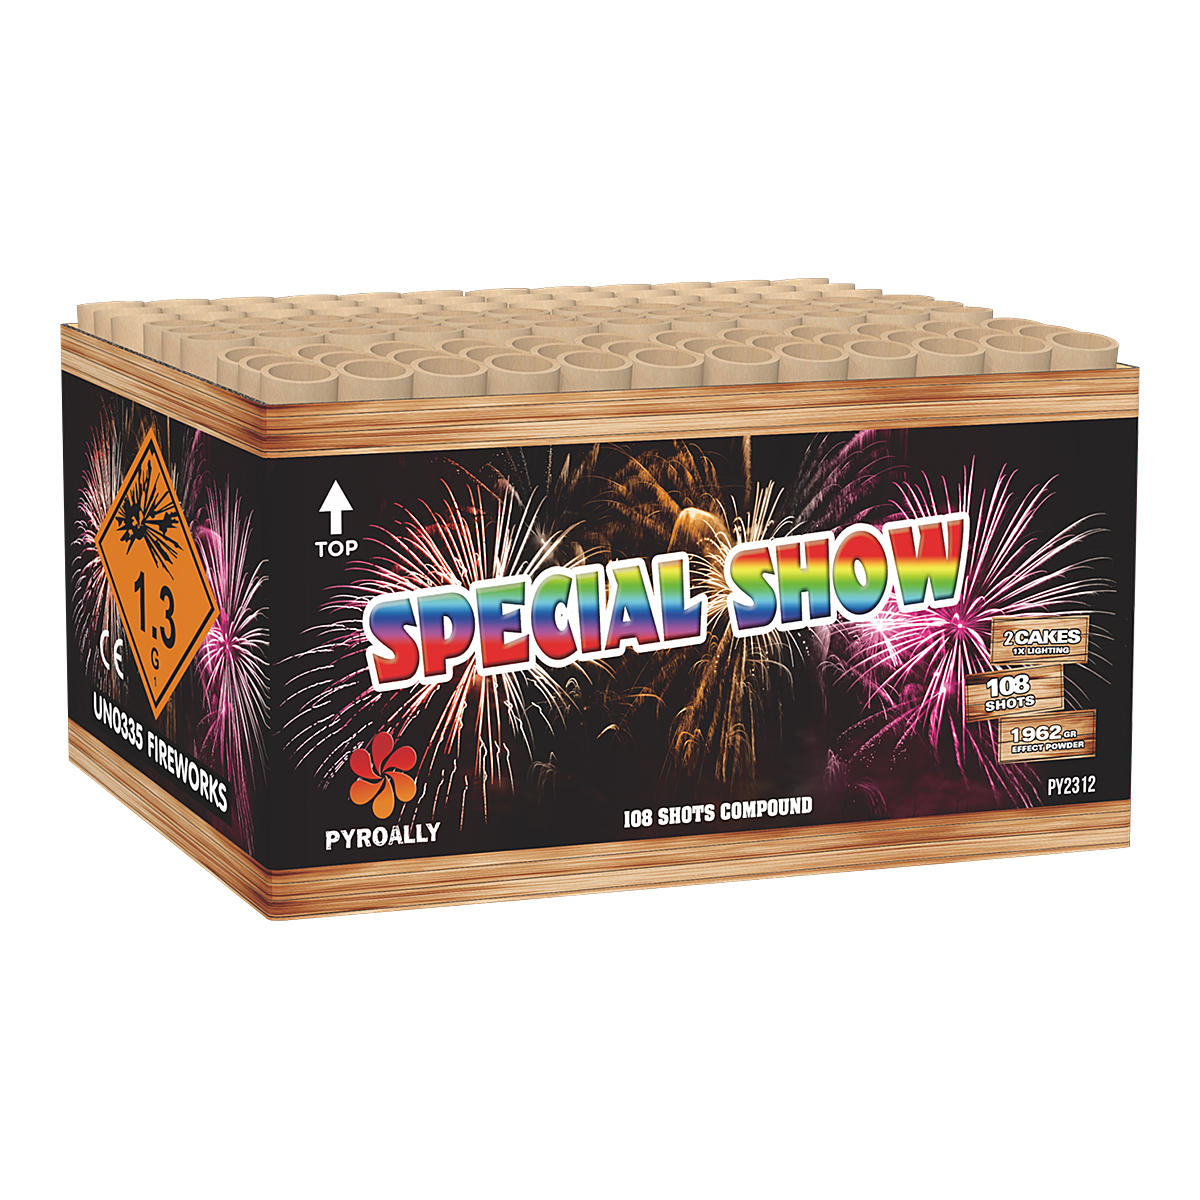 PY2312 - 108S SPECIAL SHOW Compound fireworks